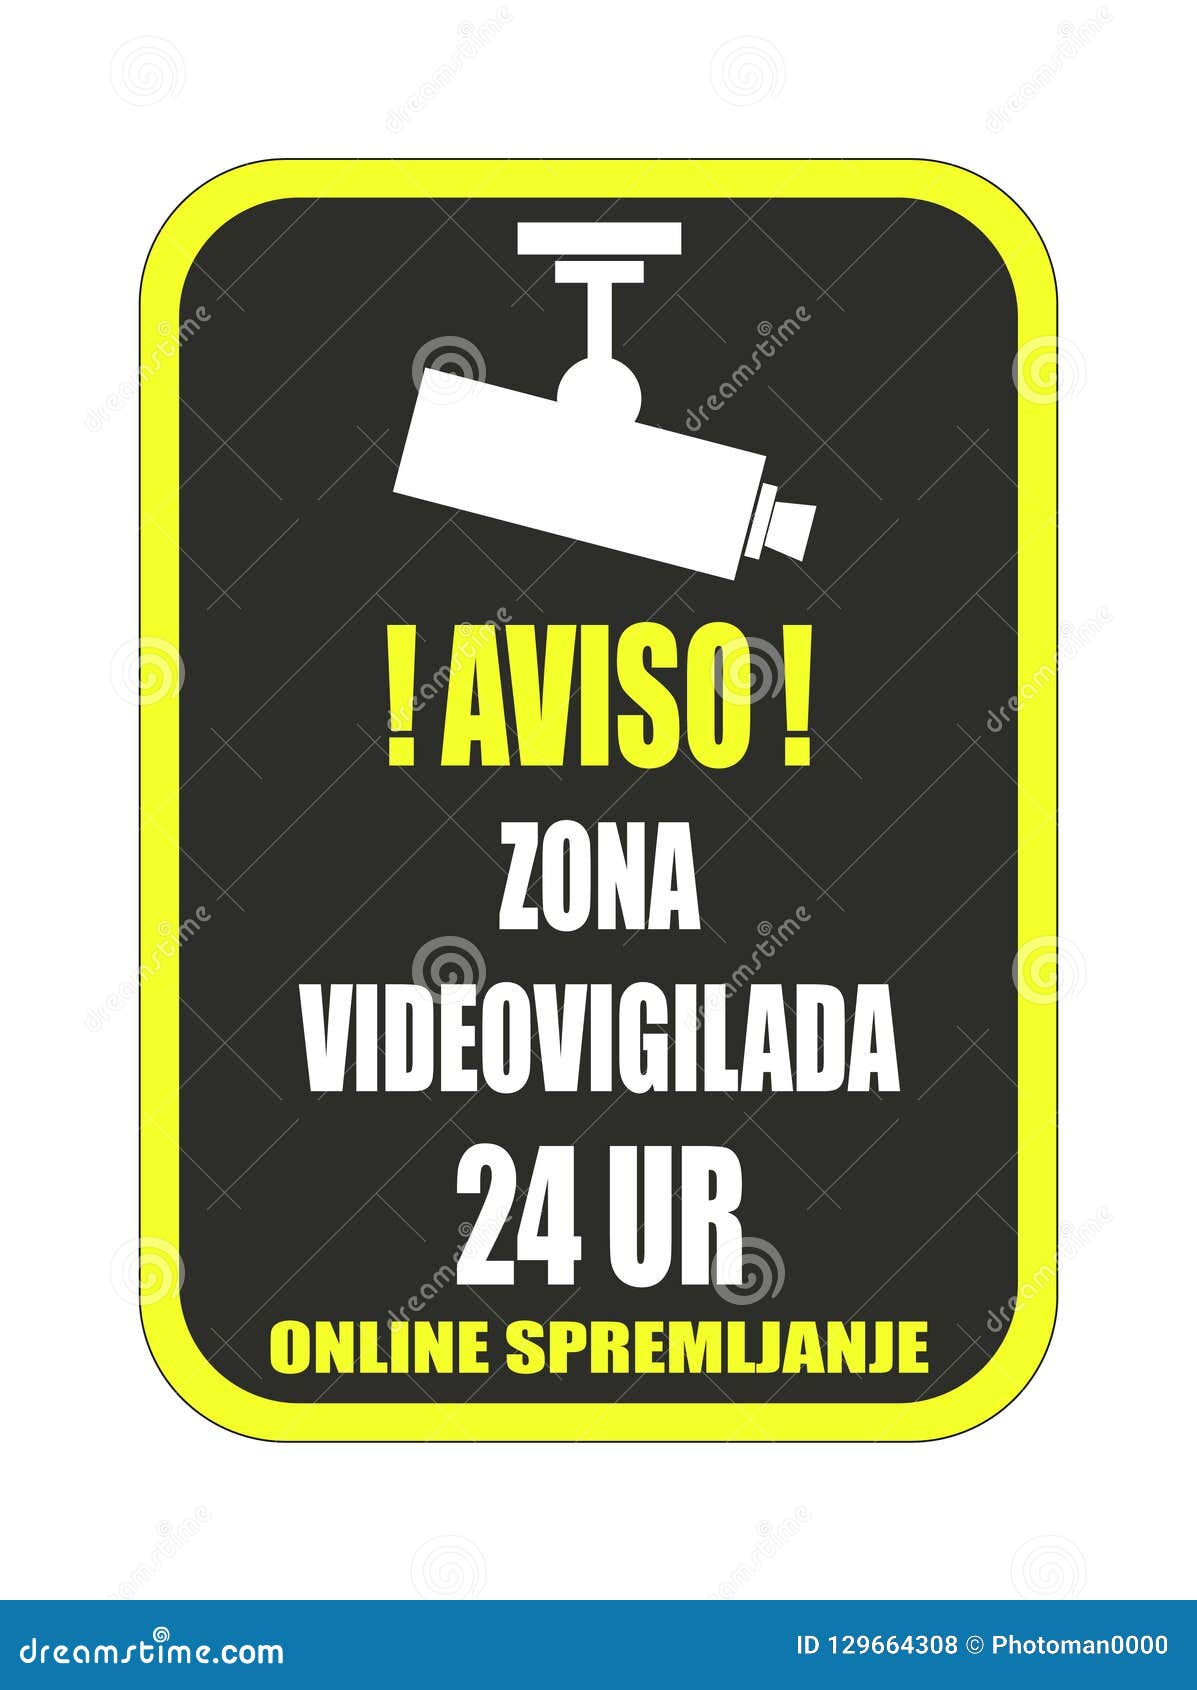 aviso zona videovigilada spanish or slovenia language